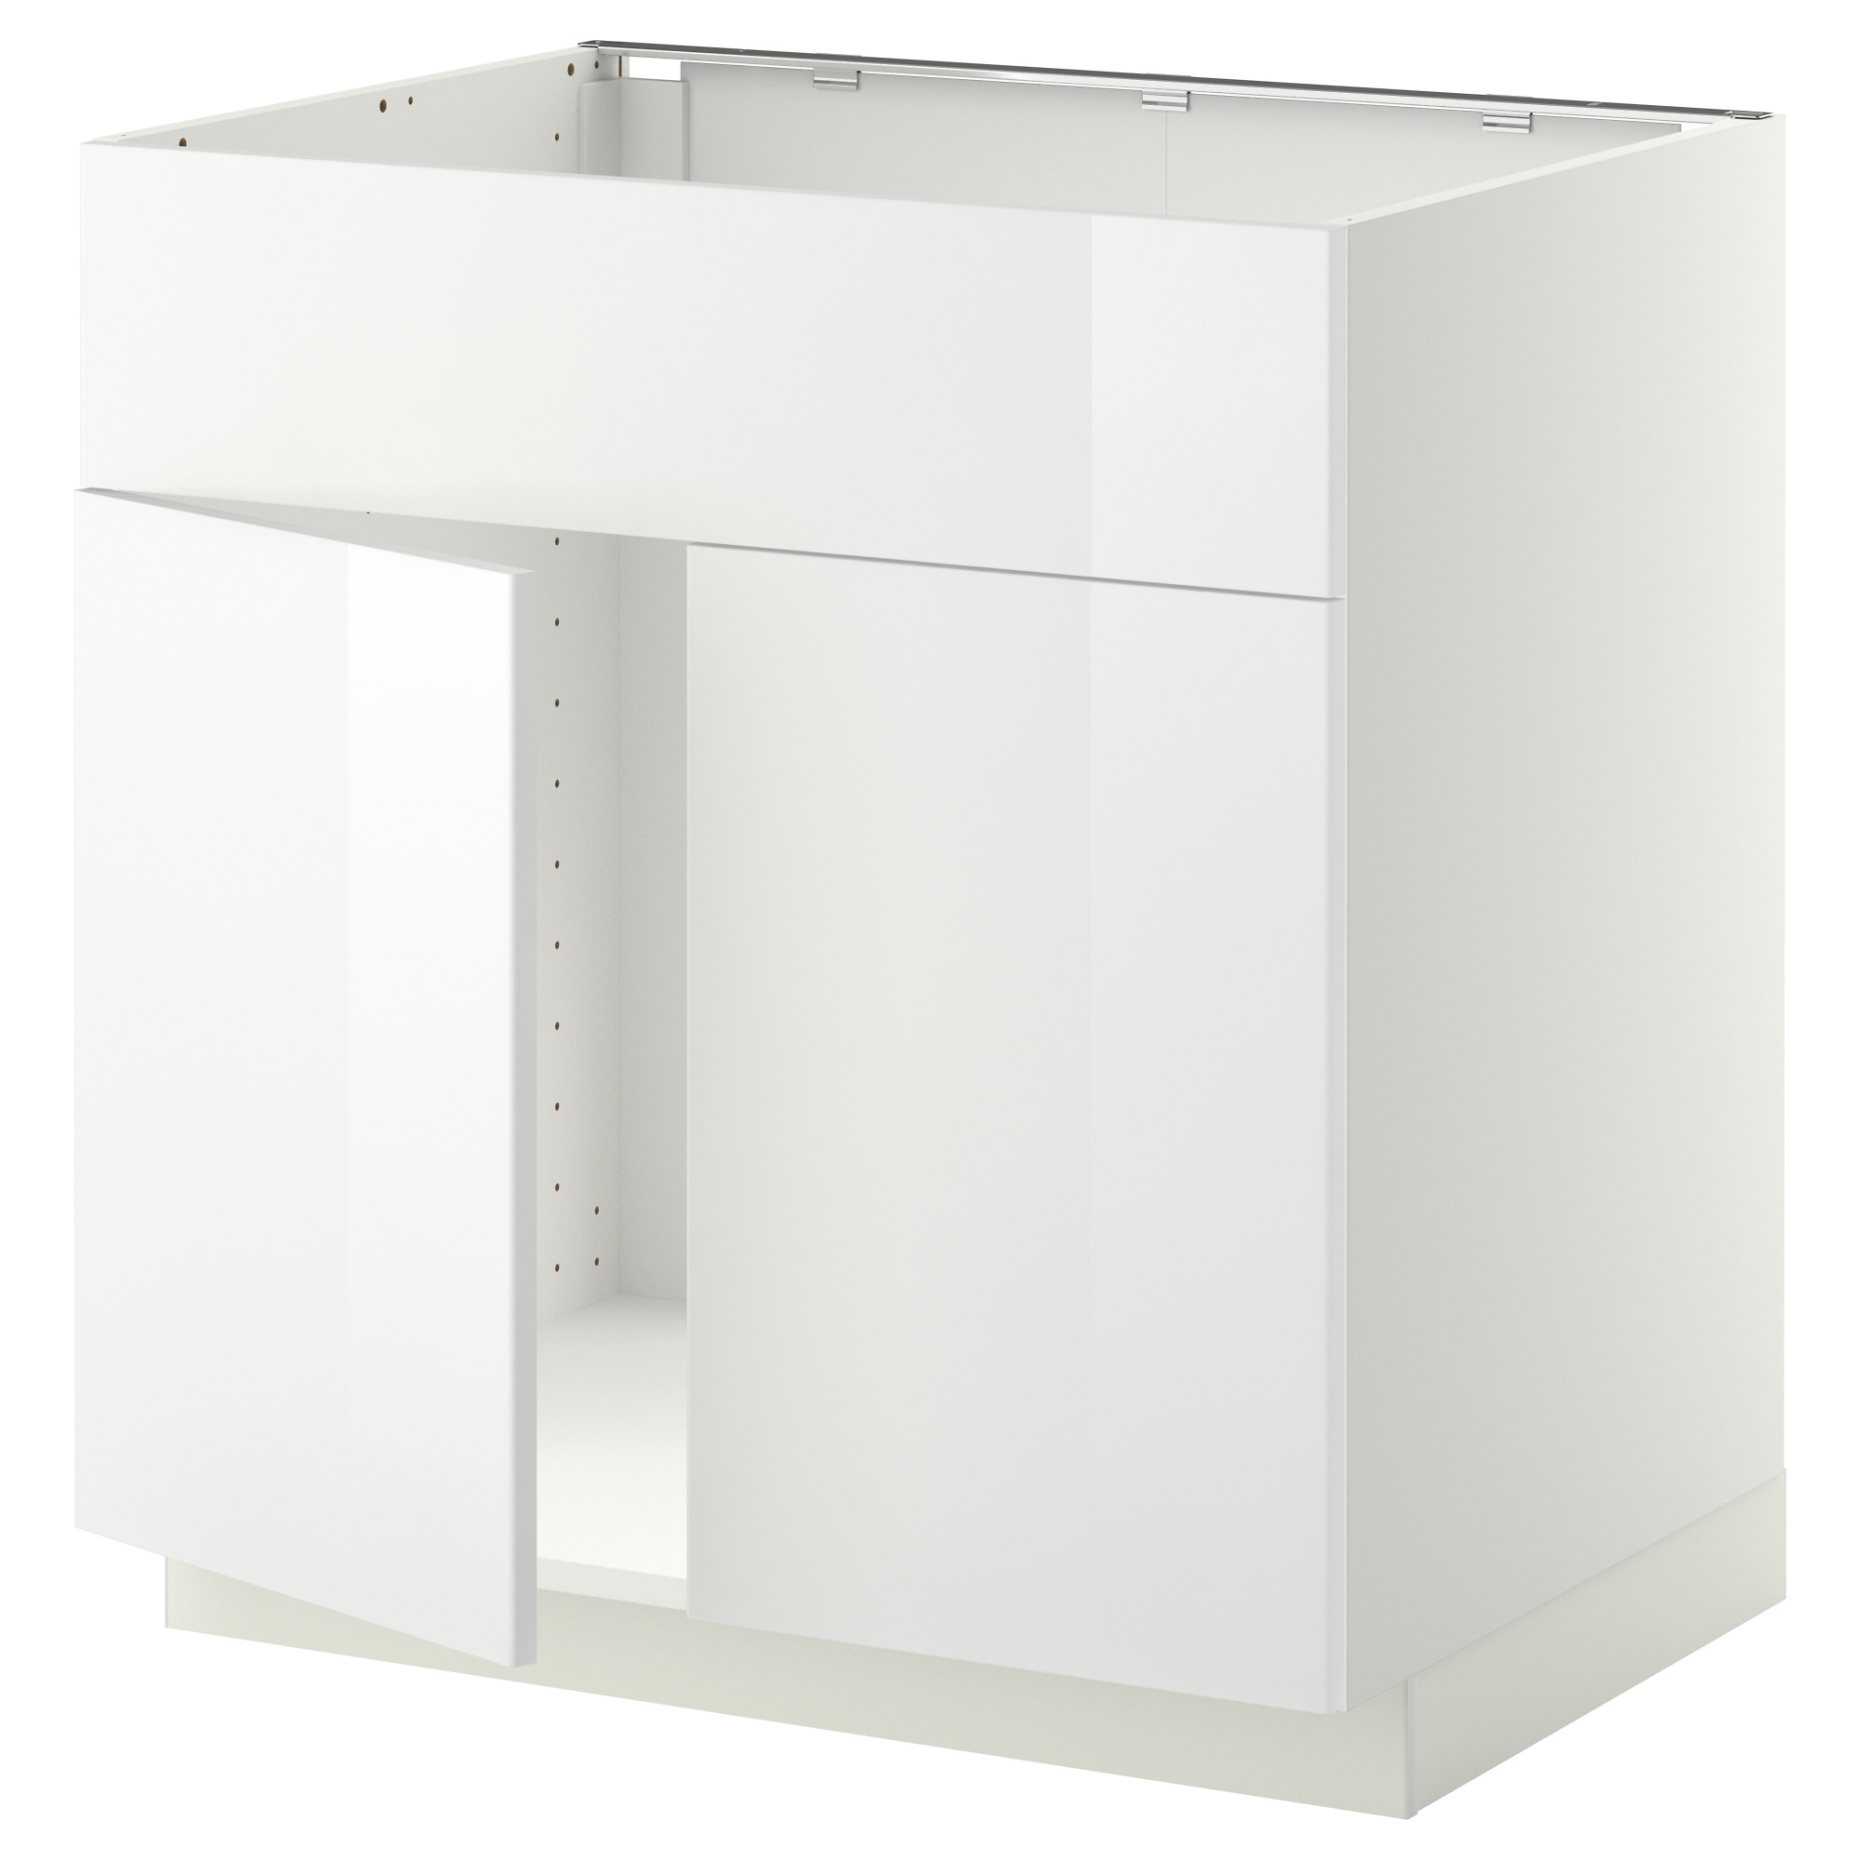 METOD, ντουλάπι βάσης για νεροχύτη με 2 πόρτες/πρόσοψη, 80x60 cm, 094.630.53